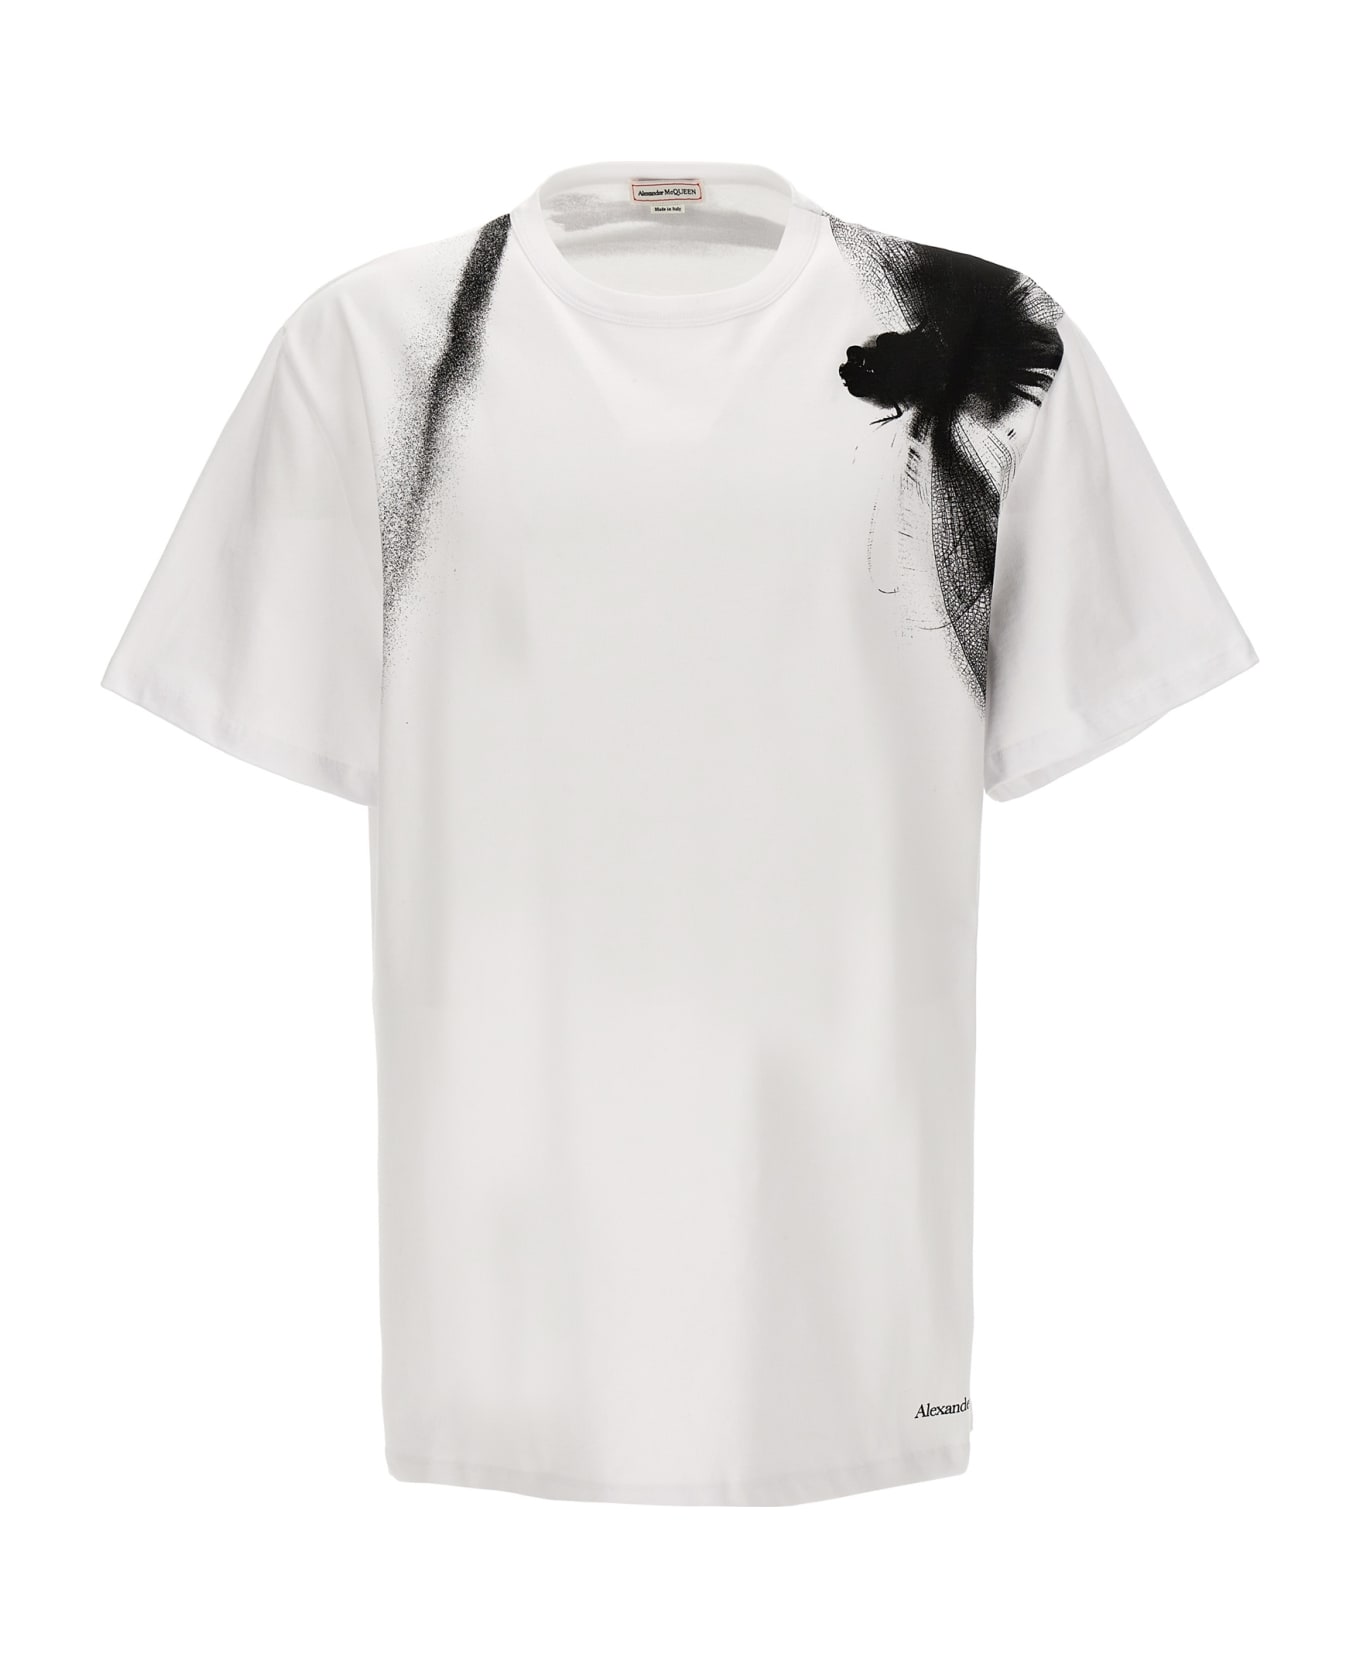 Alexander McQueen Contrast Print T-shirt - White/Black シャツ